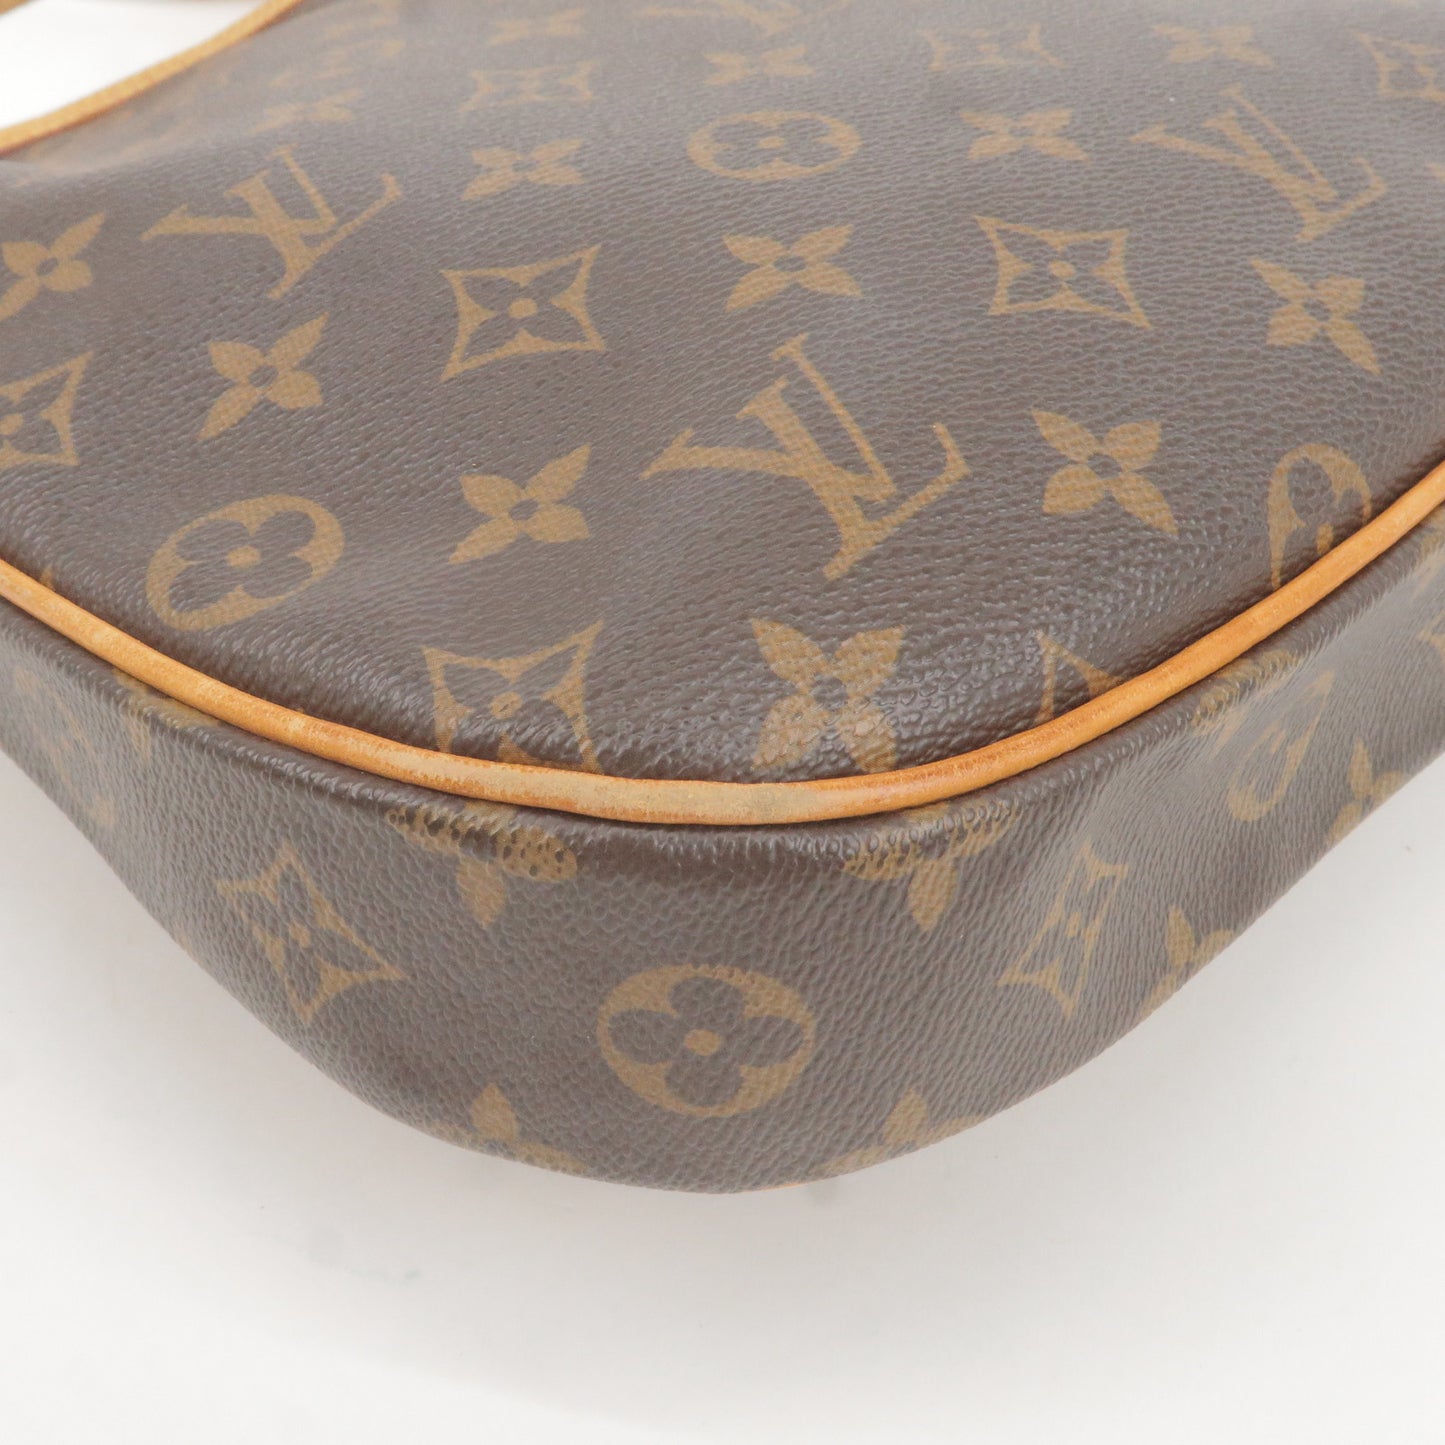 Louis Vuitton Monogram Odeon PM Shoulder Bag Crossbody Bag M56390